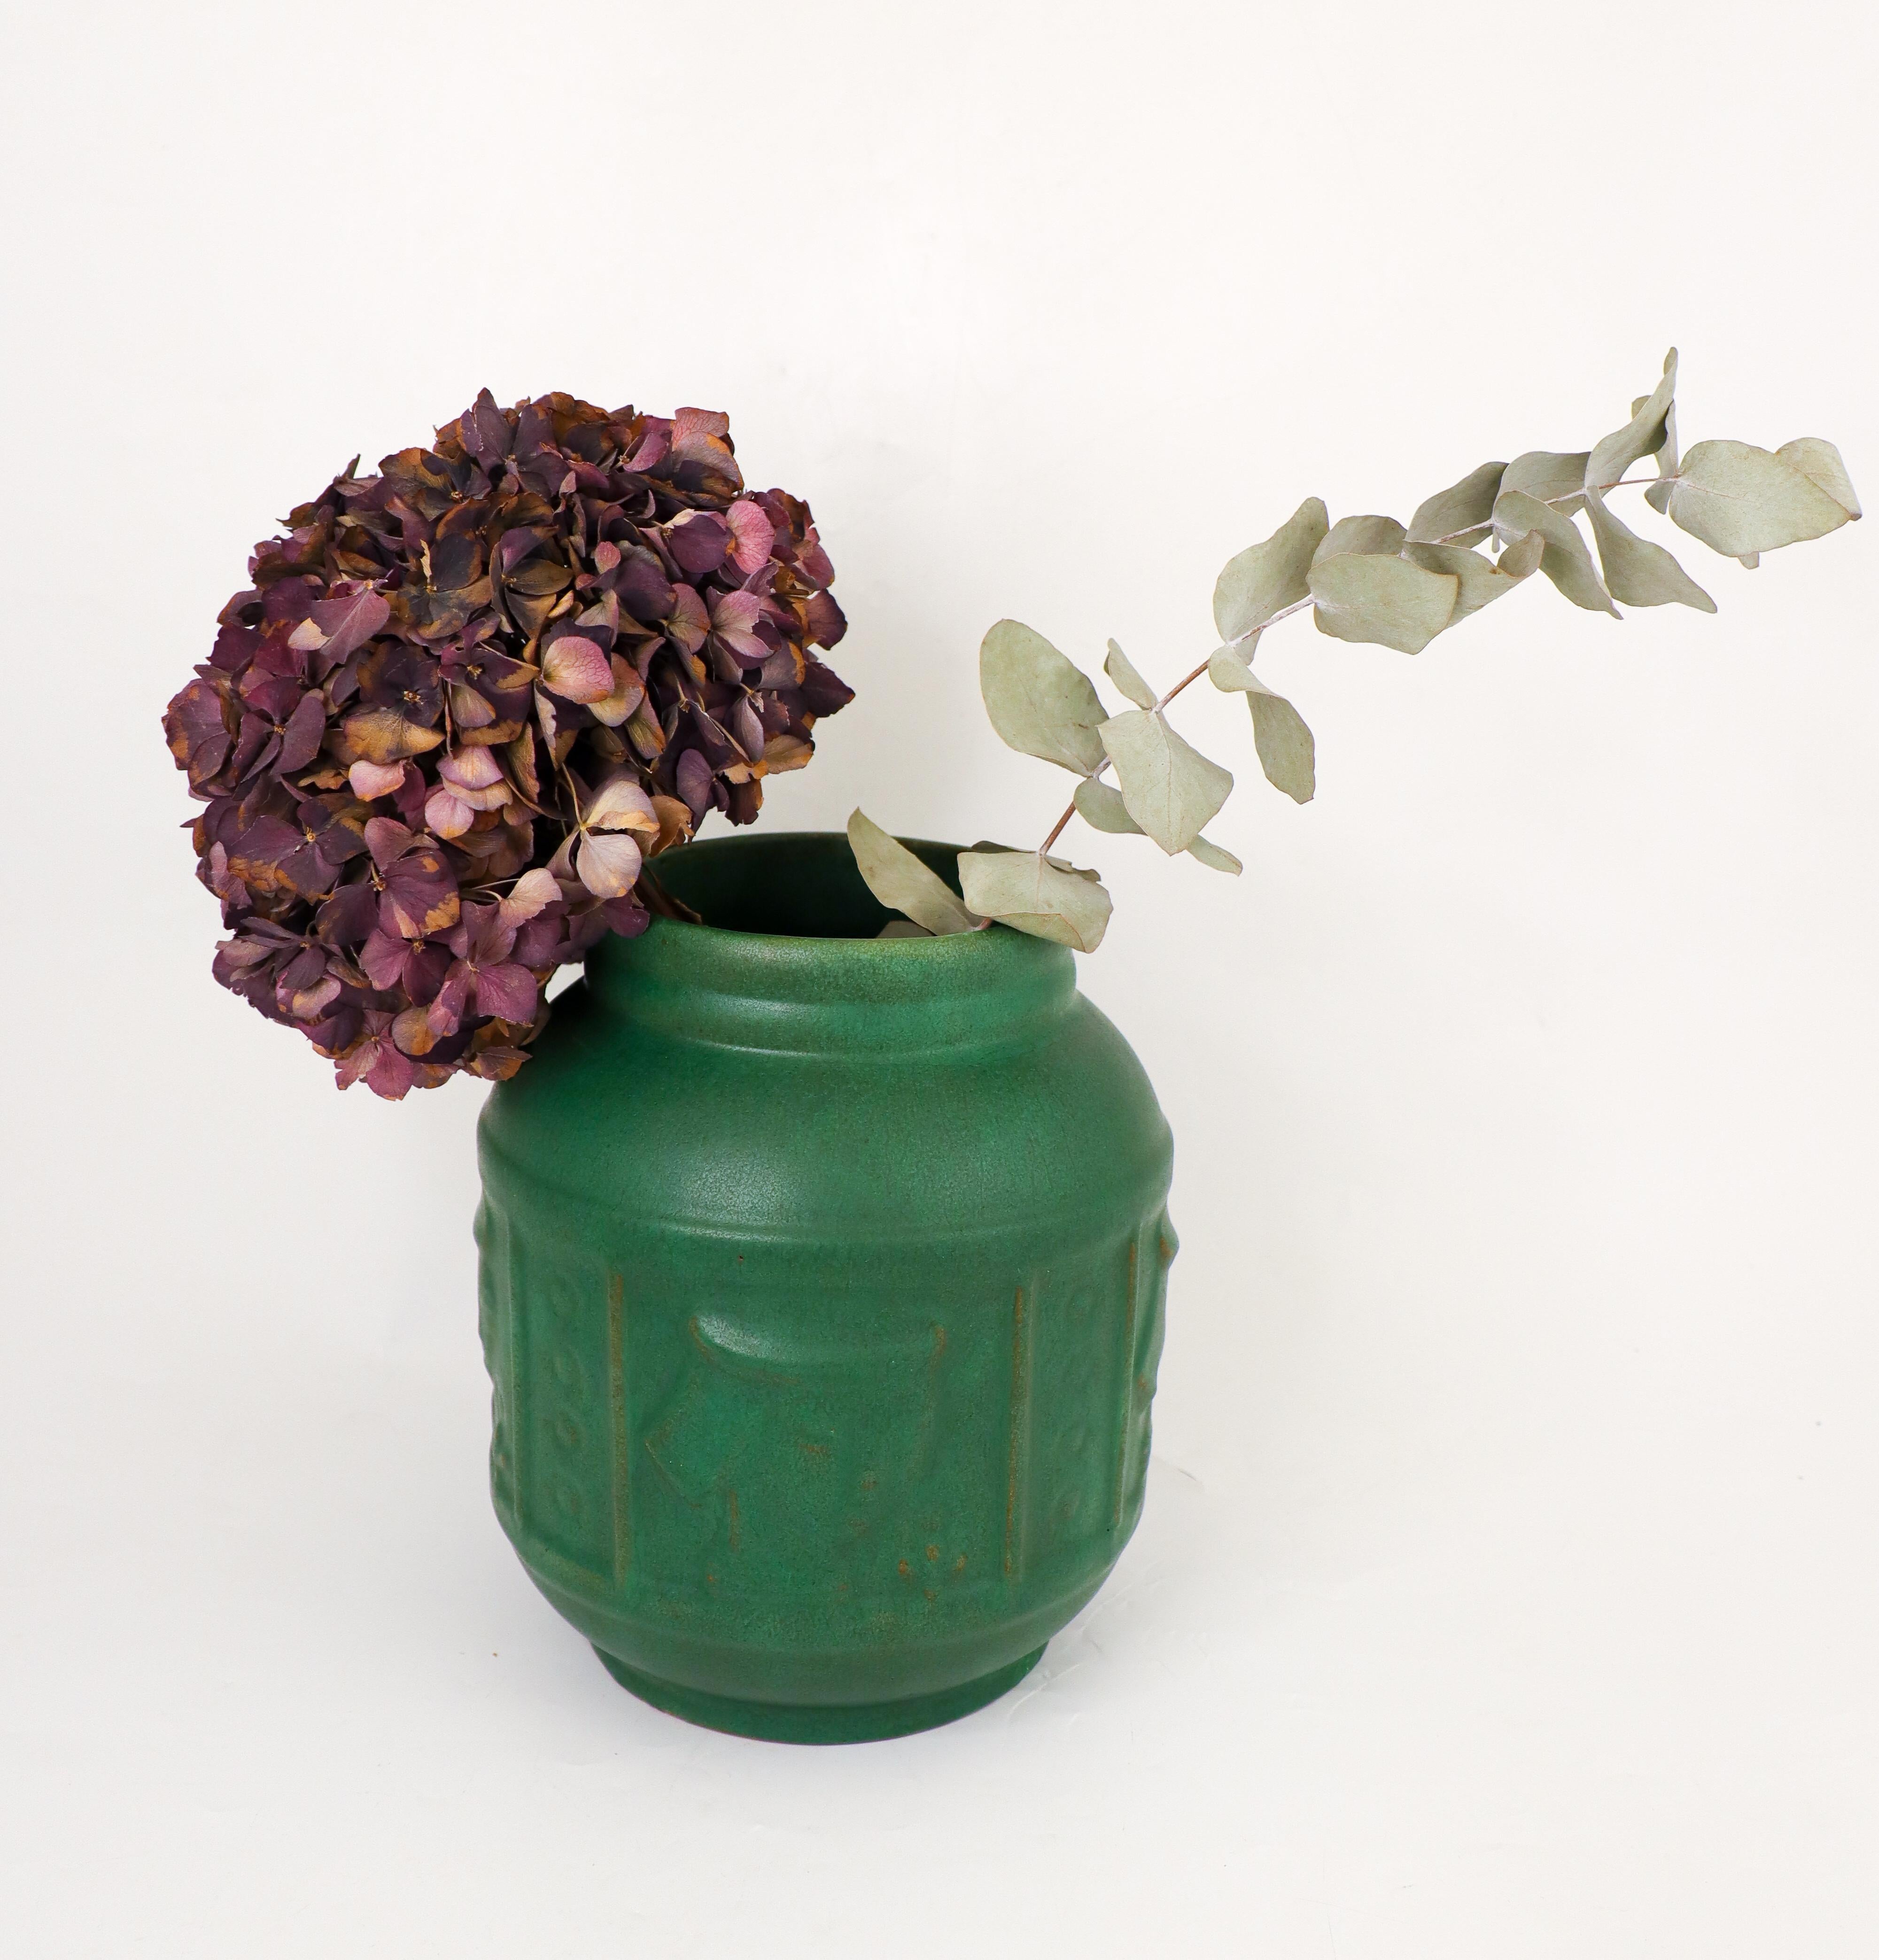 Scandinavian Modern Green Ceramic Vase with Faces - Kupittaa Savi, Finland For Sale